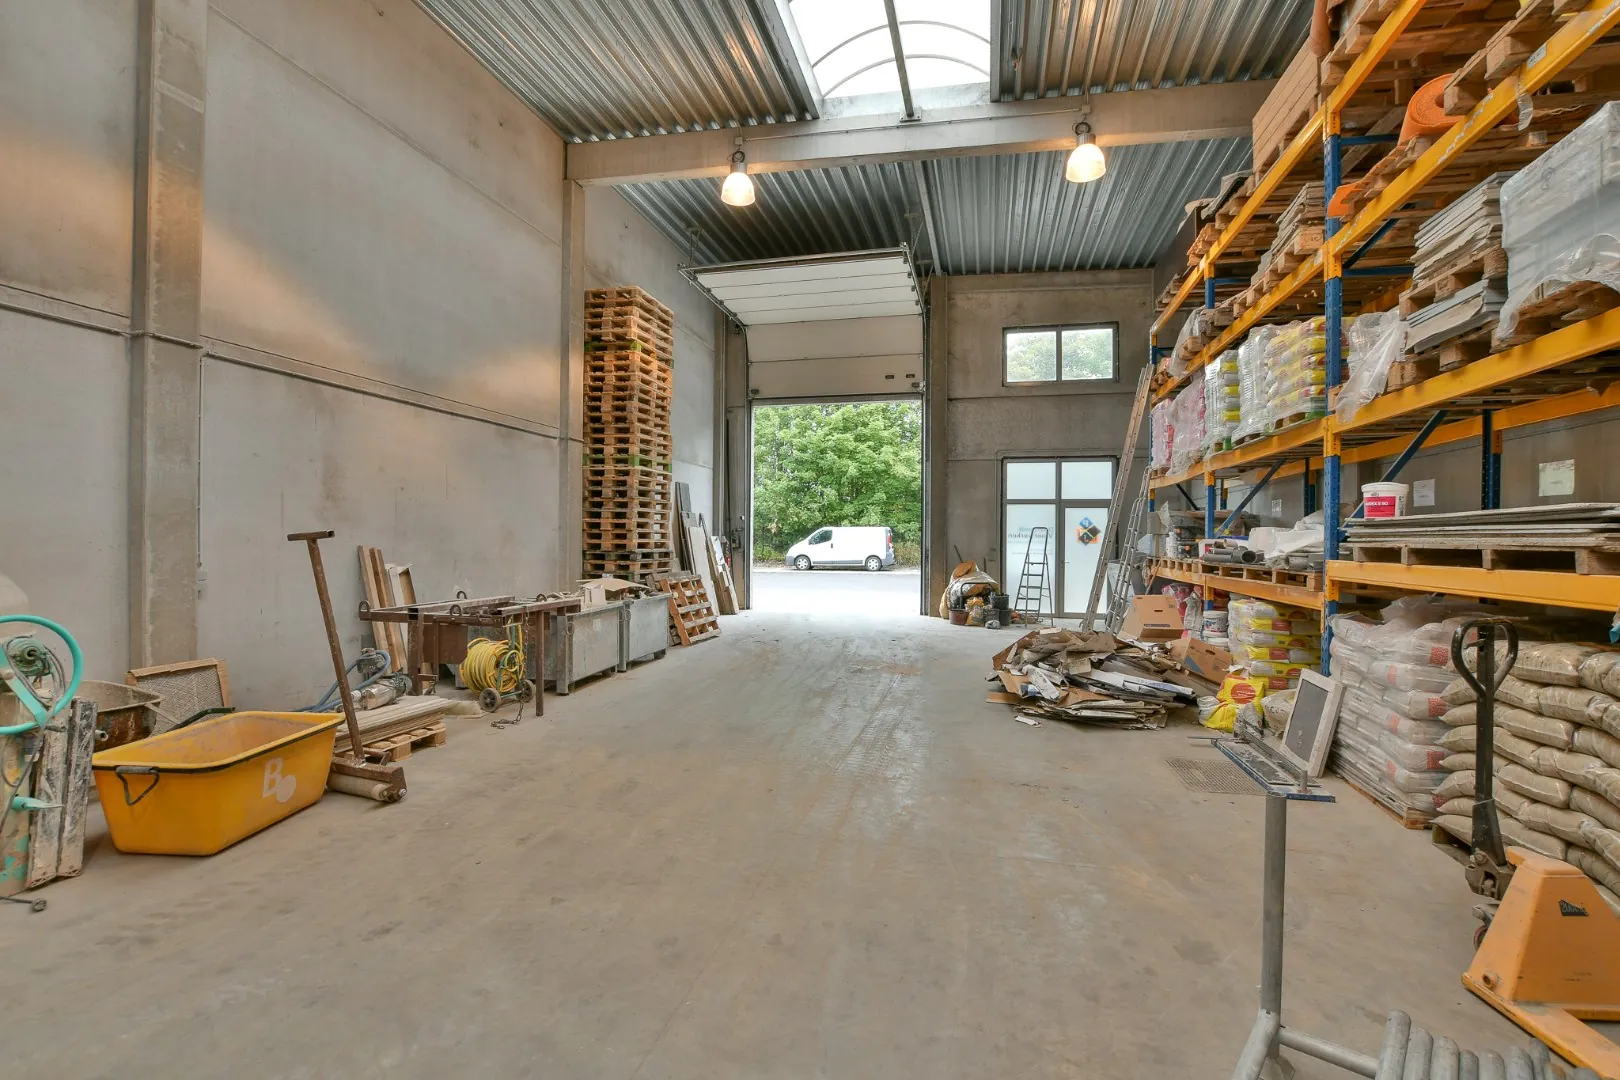 Recente loods te koop van +- 245 m² in bedrijvenpark SPUIKOM te Bredene